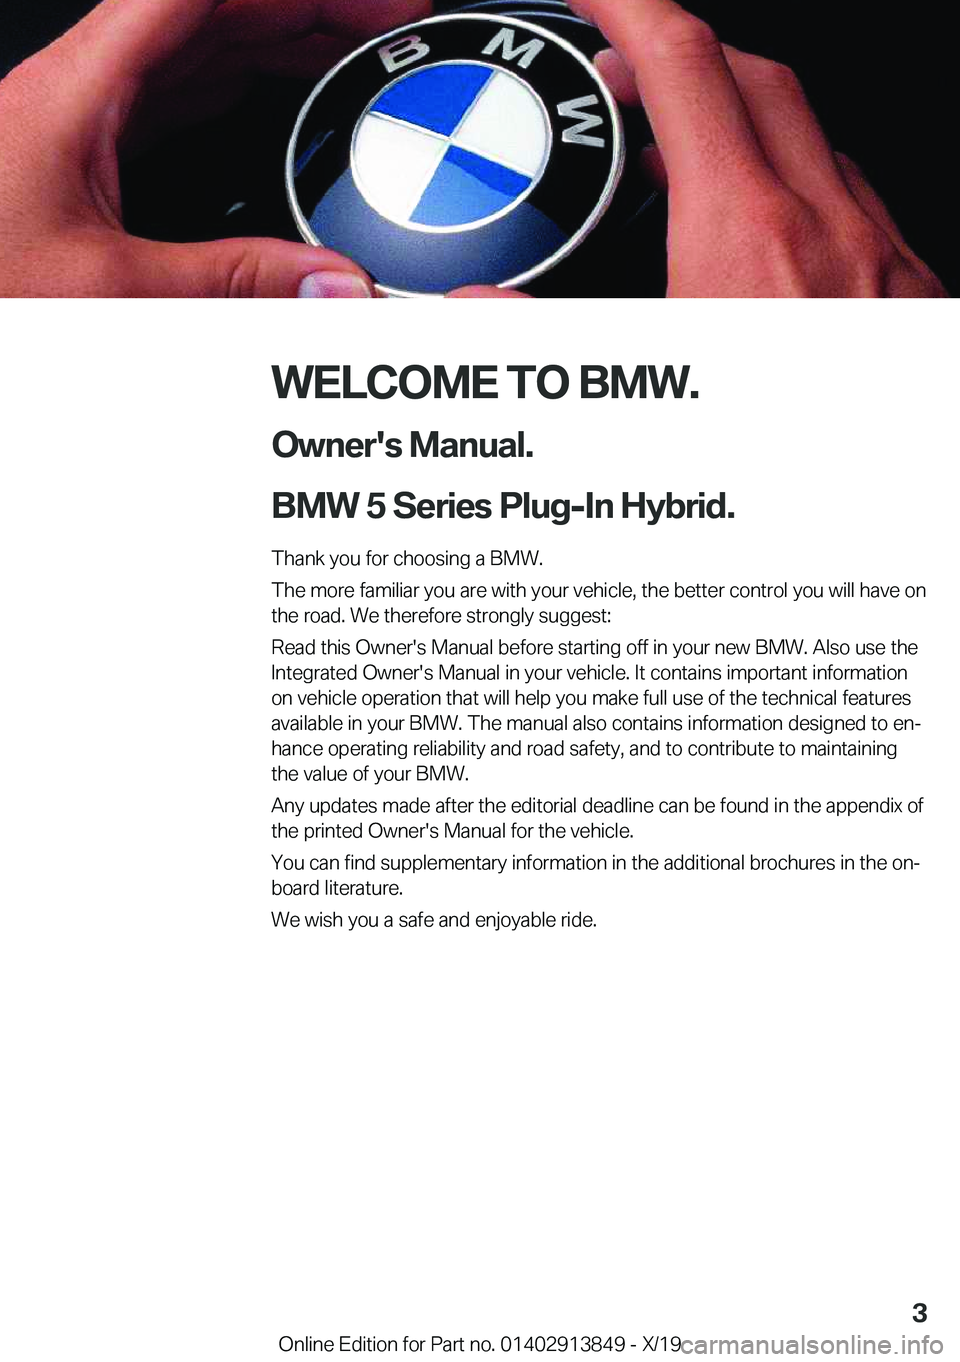 BMW 5 SERIES 2020  Owners Manual �W�E�L�C�O�M�E��T�O��B�M�W�.�O�w�n�e�r�'�s��M�a�n�u�a�l�.
�B�M�W��5��S�e�r�i�e�s��P�l�u�g�-�I�n��H�y�b�r�i�d�.
�T�h�a�n�k��y�o�u��f�o�r��c�h�o�o�s�i�n�g��a��B�M�W�.
�T�h�e��m�o�r�e��